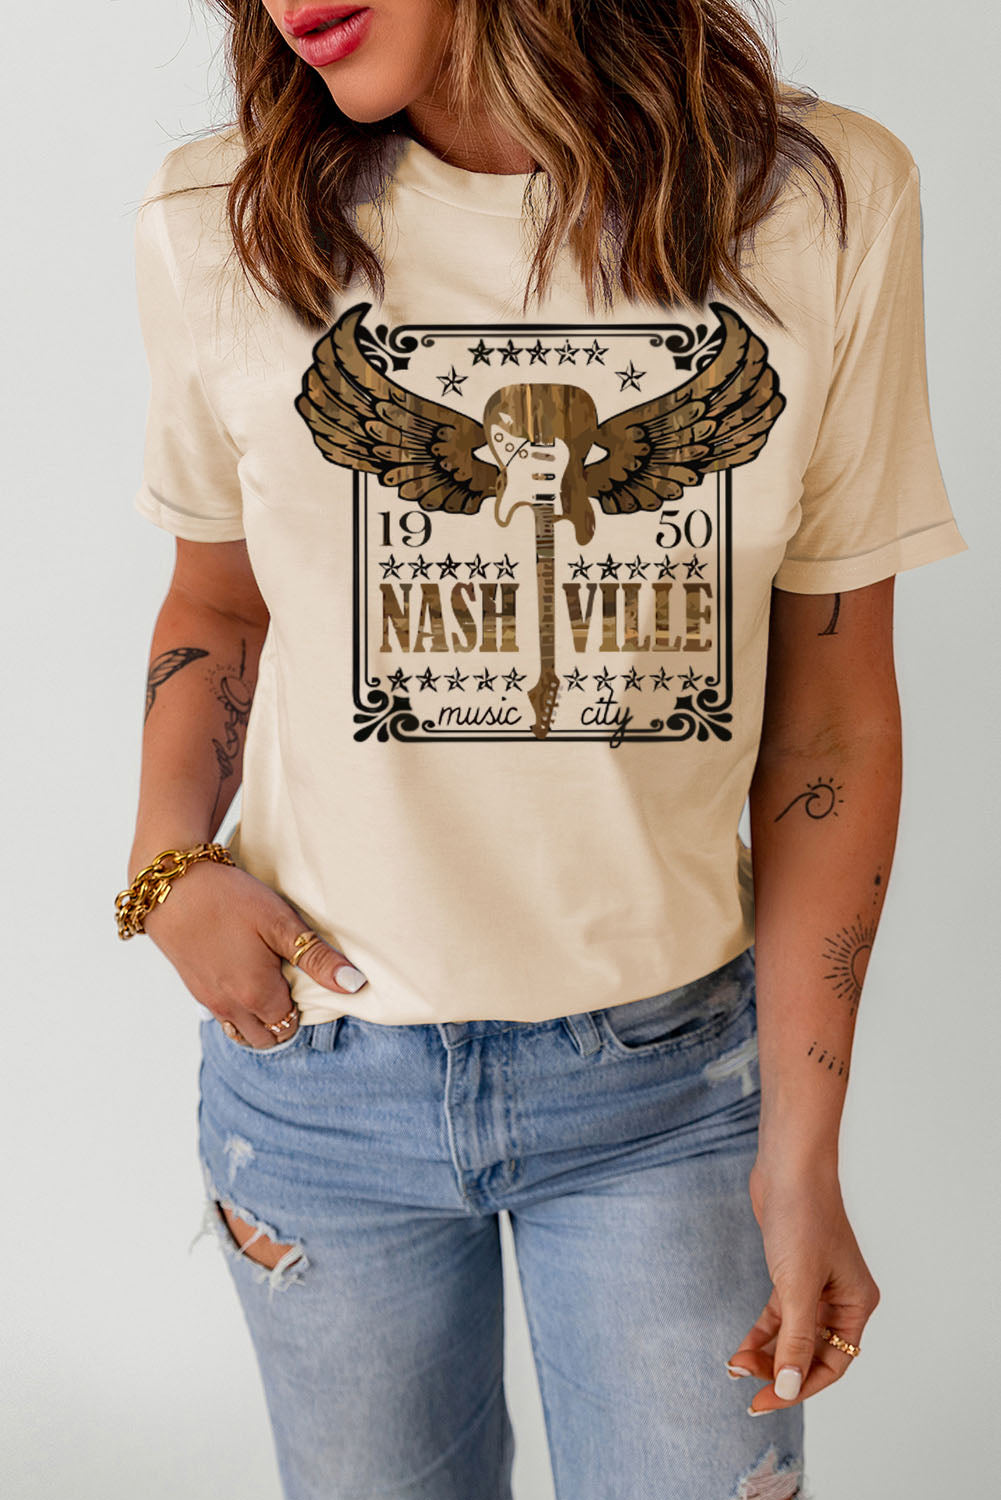 1950 NASHVILLE MUSIC CITY Graphic Tee Shirt - Kawaii Stop - Casual, Graphic Tee, Music City, Nashville, Polyester, Regular Fit, Round Neck, Ship From Overseas, Short Sleeve, Spandex, SYNZ, T-Shirt, T-Shirts, Tee, Women's Clothing, Women's Top